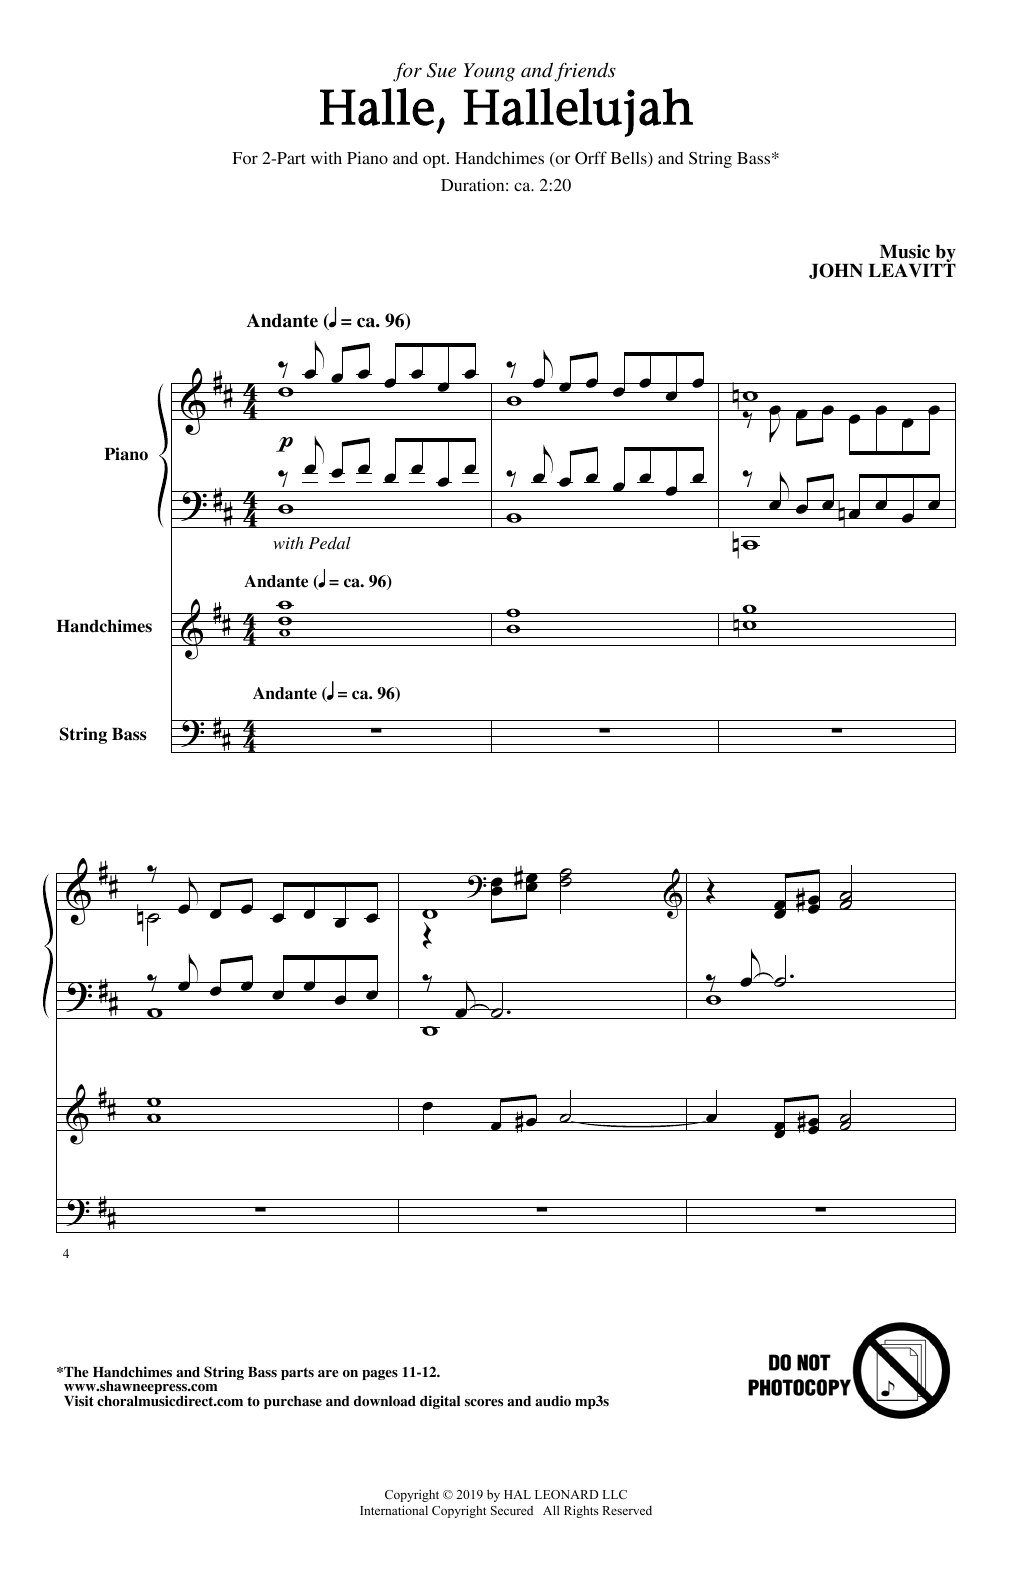 John Leavitt Halle, Hallelujah Sheet Music Notes & Chords for 2-Part Choir - Download or Print PDF